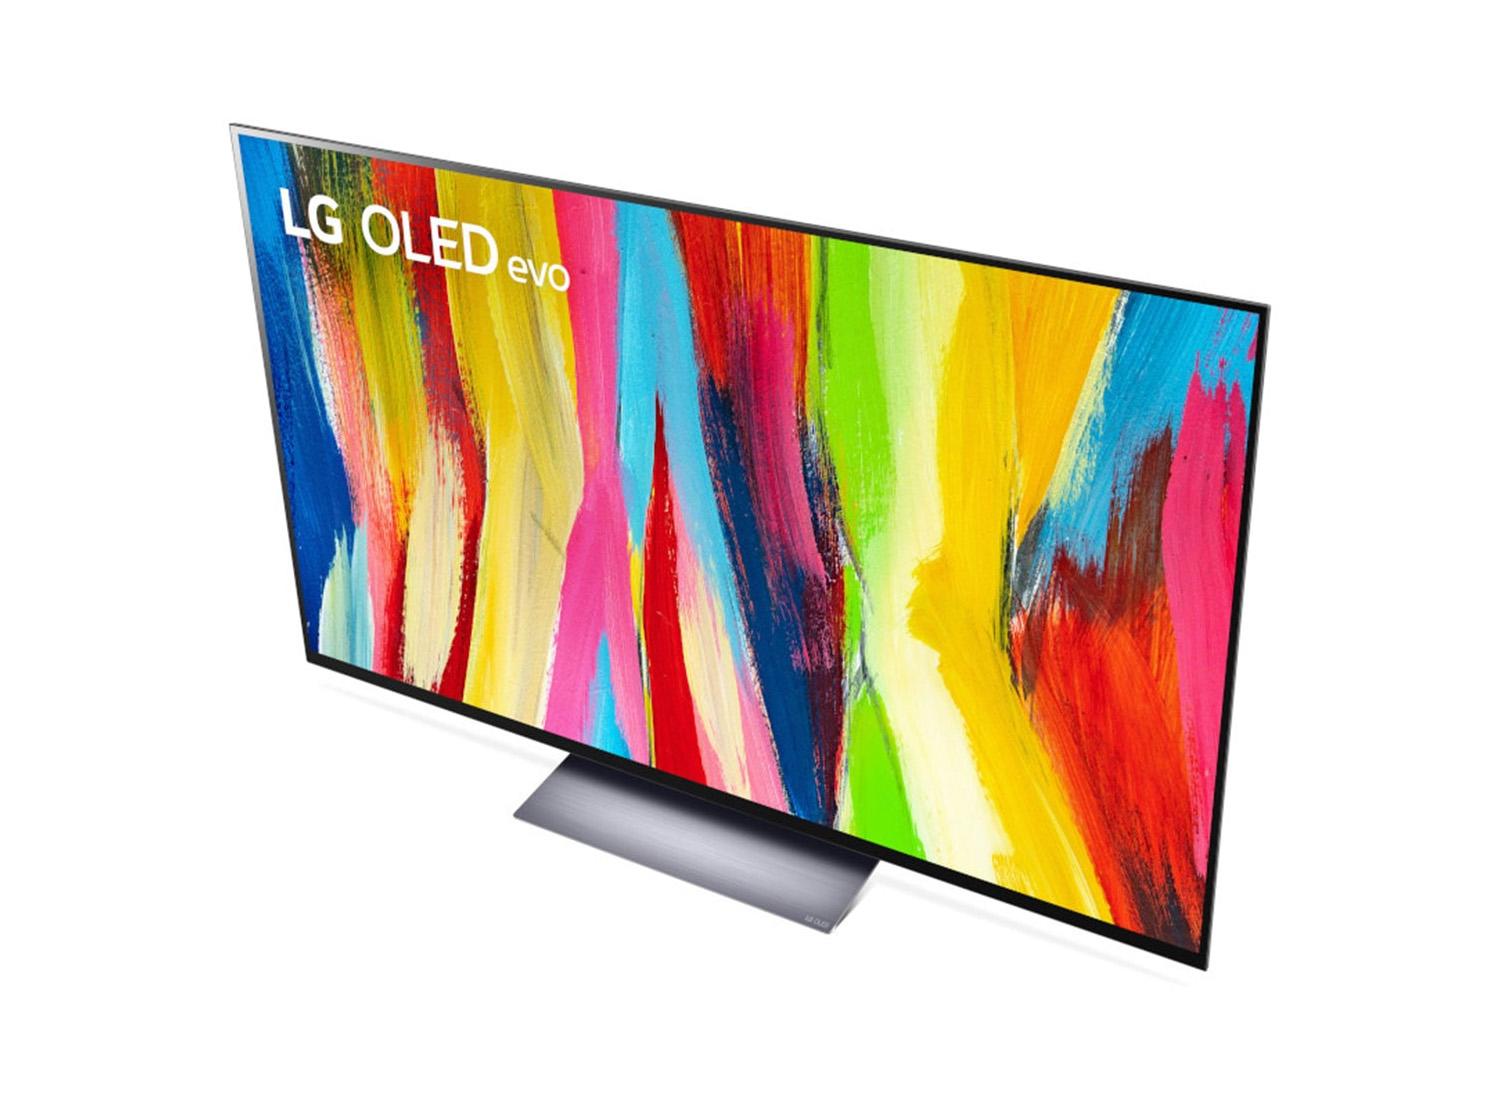 Gamme TV LG OLED CS, 4K 120 FPS, HDR, HDMI 2.1, Dolby Atmos